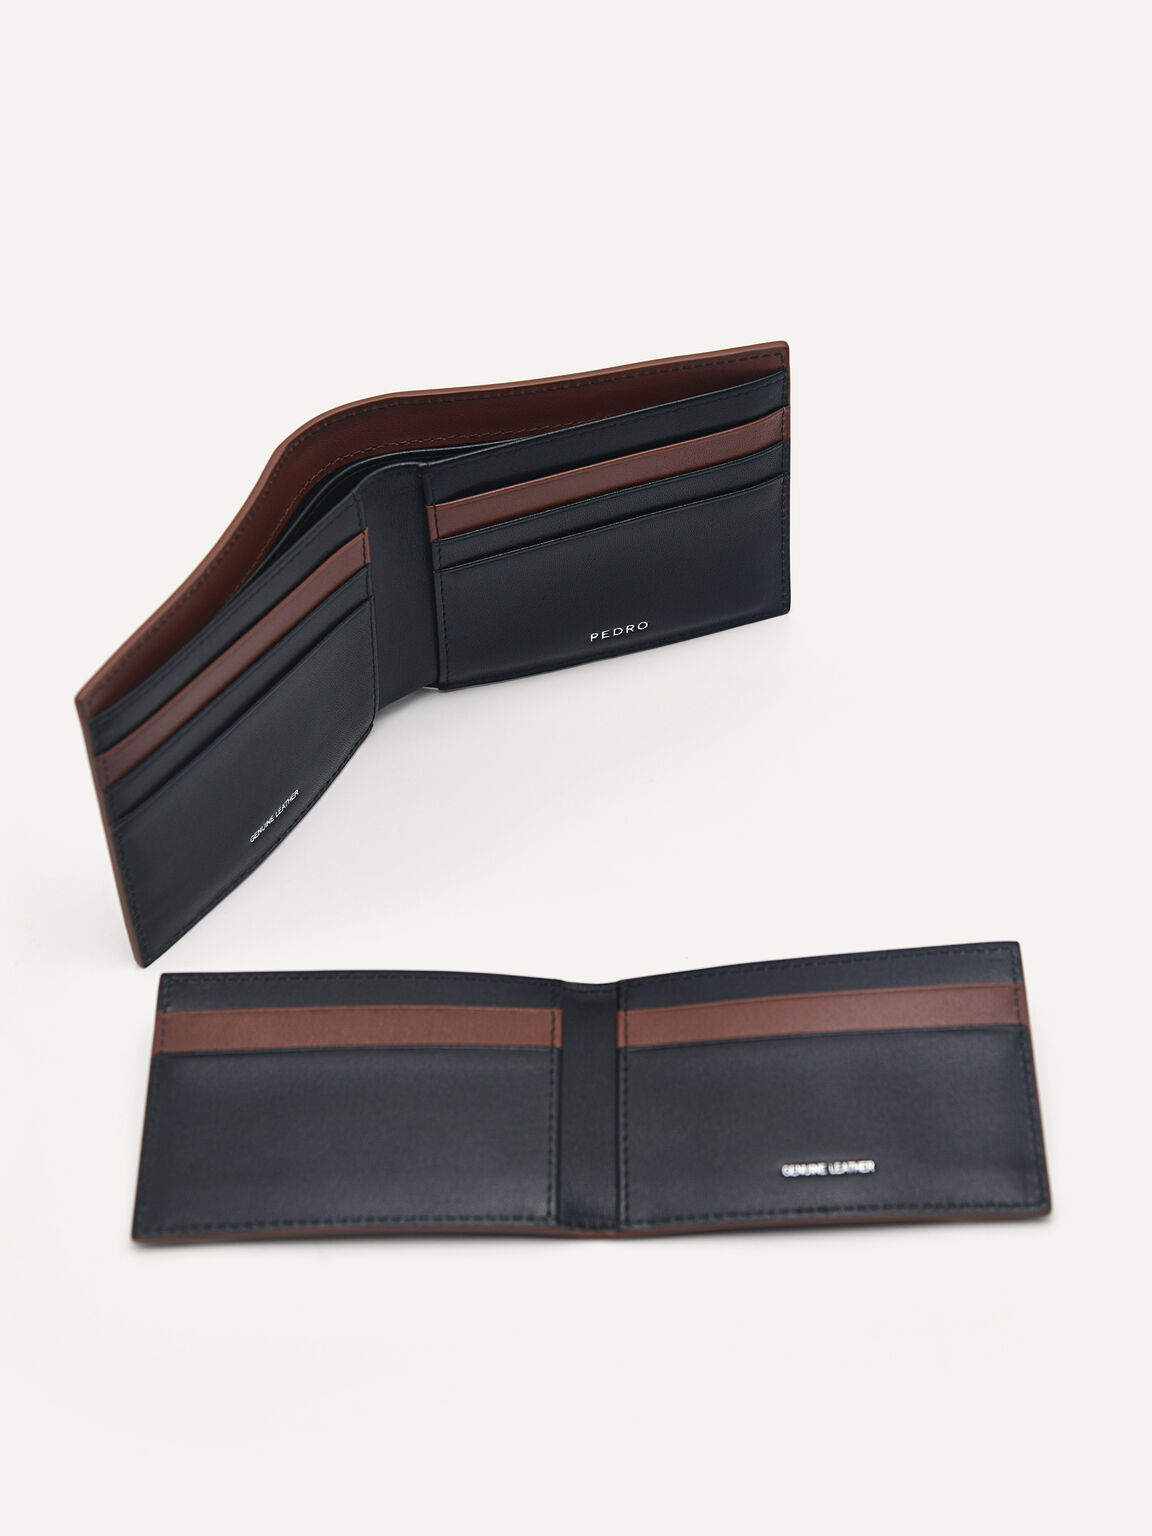 Leather Bi-Fold Wallet, Brown